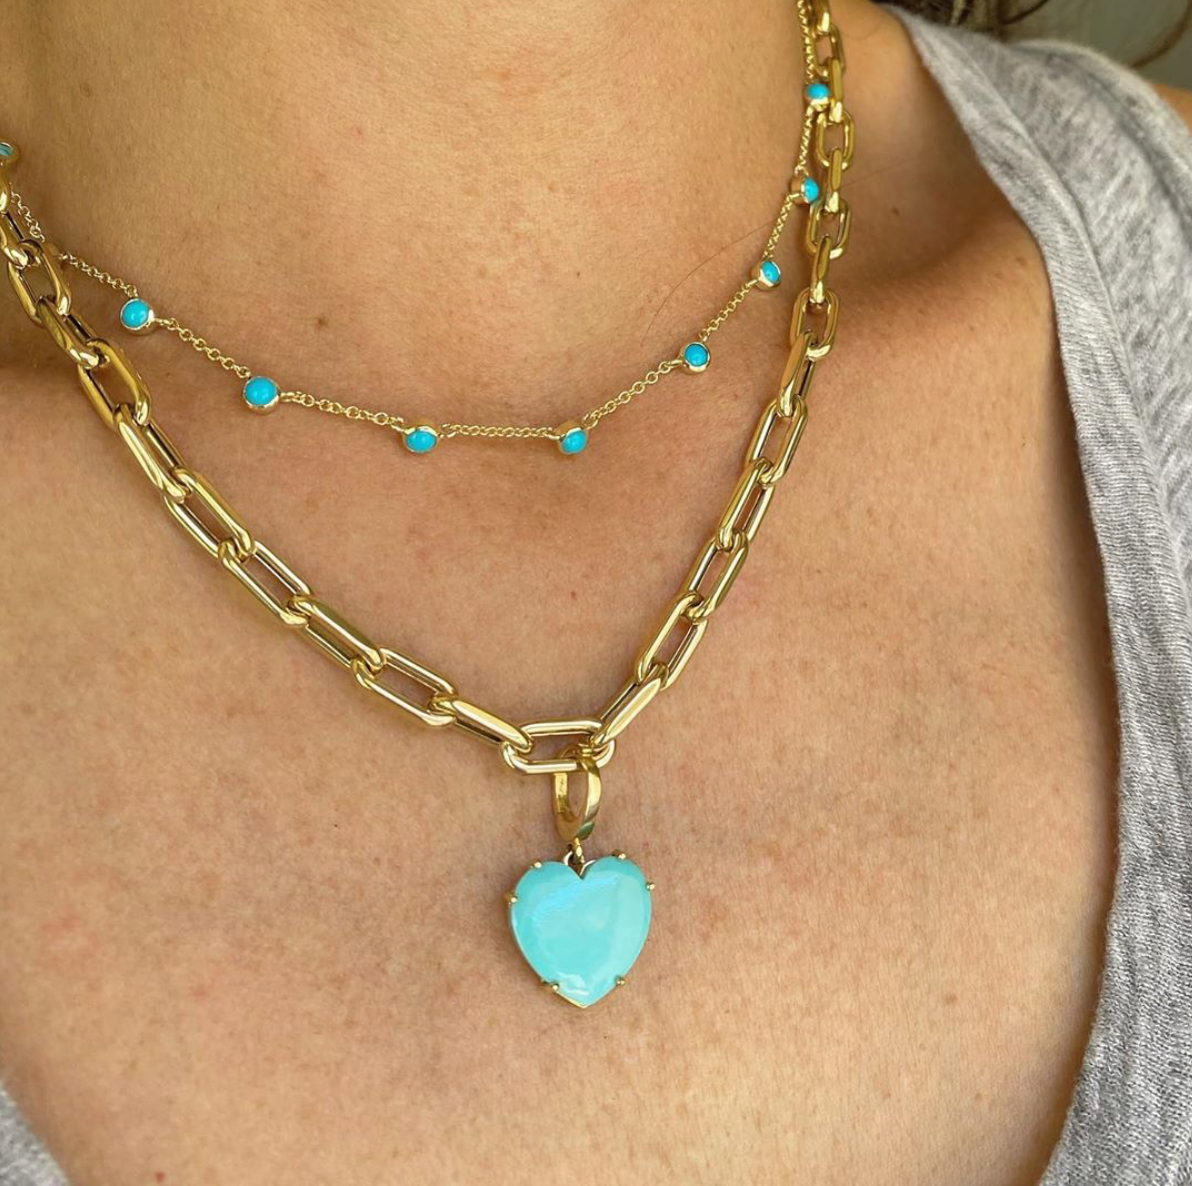 10-turquoise-bezel-necklace-rose-gold-shylee-white-jewelry